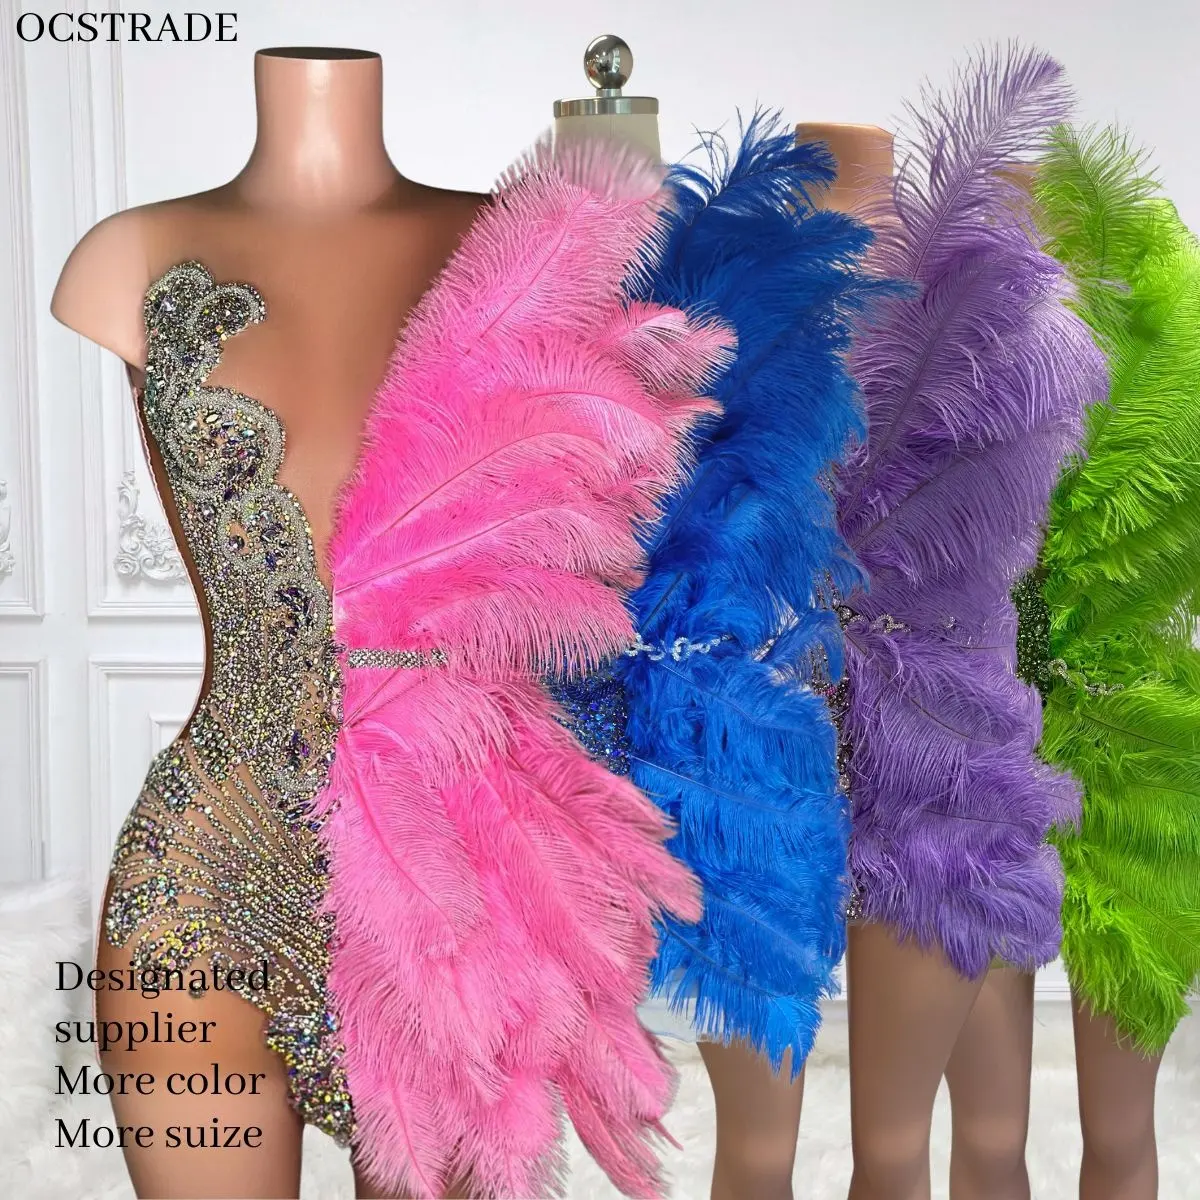 Ocstrade Unique Design Rhinestone Hot Pink Dress With Feathers Glitter Diamond Club Party Dress Women Performance Wear Ballroom